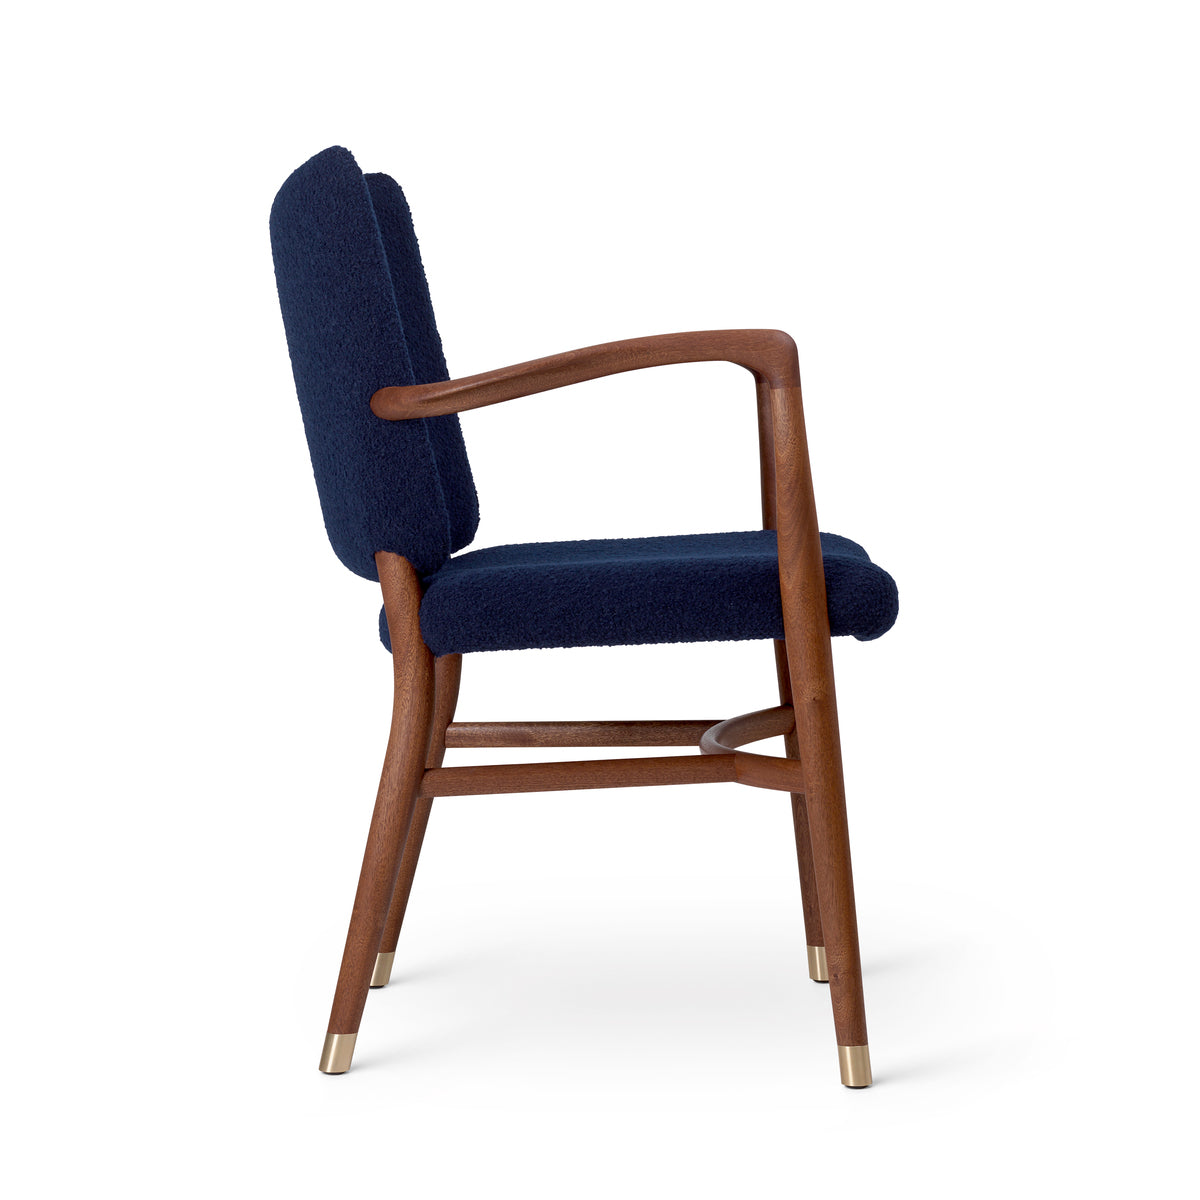 Carl Hansen VLA61 Monar CH fauteuil, huile en acajou / Baru 0780 textile